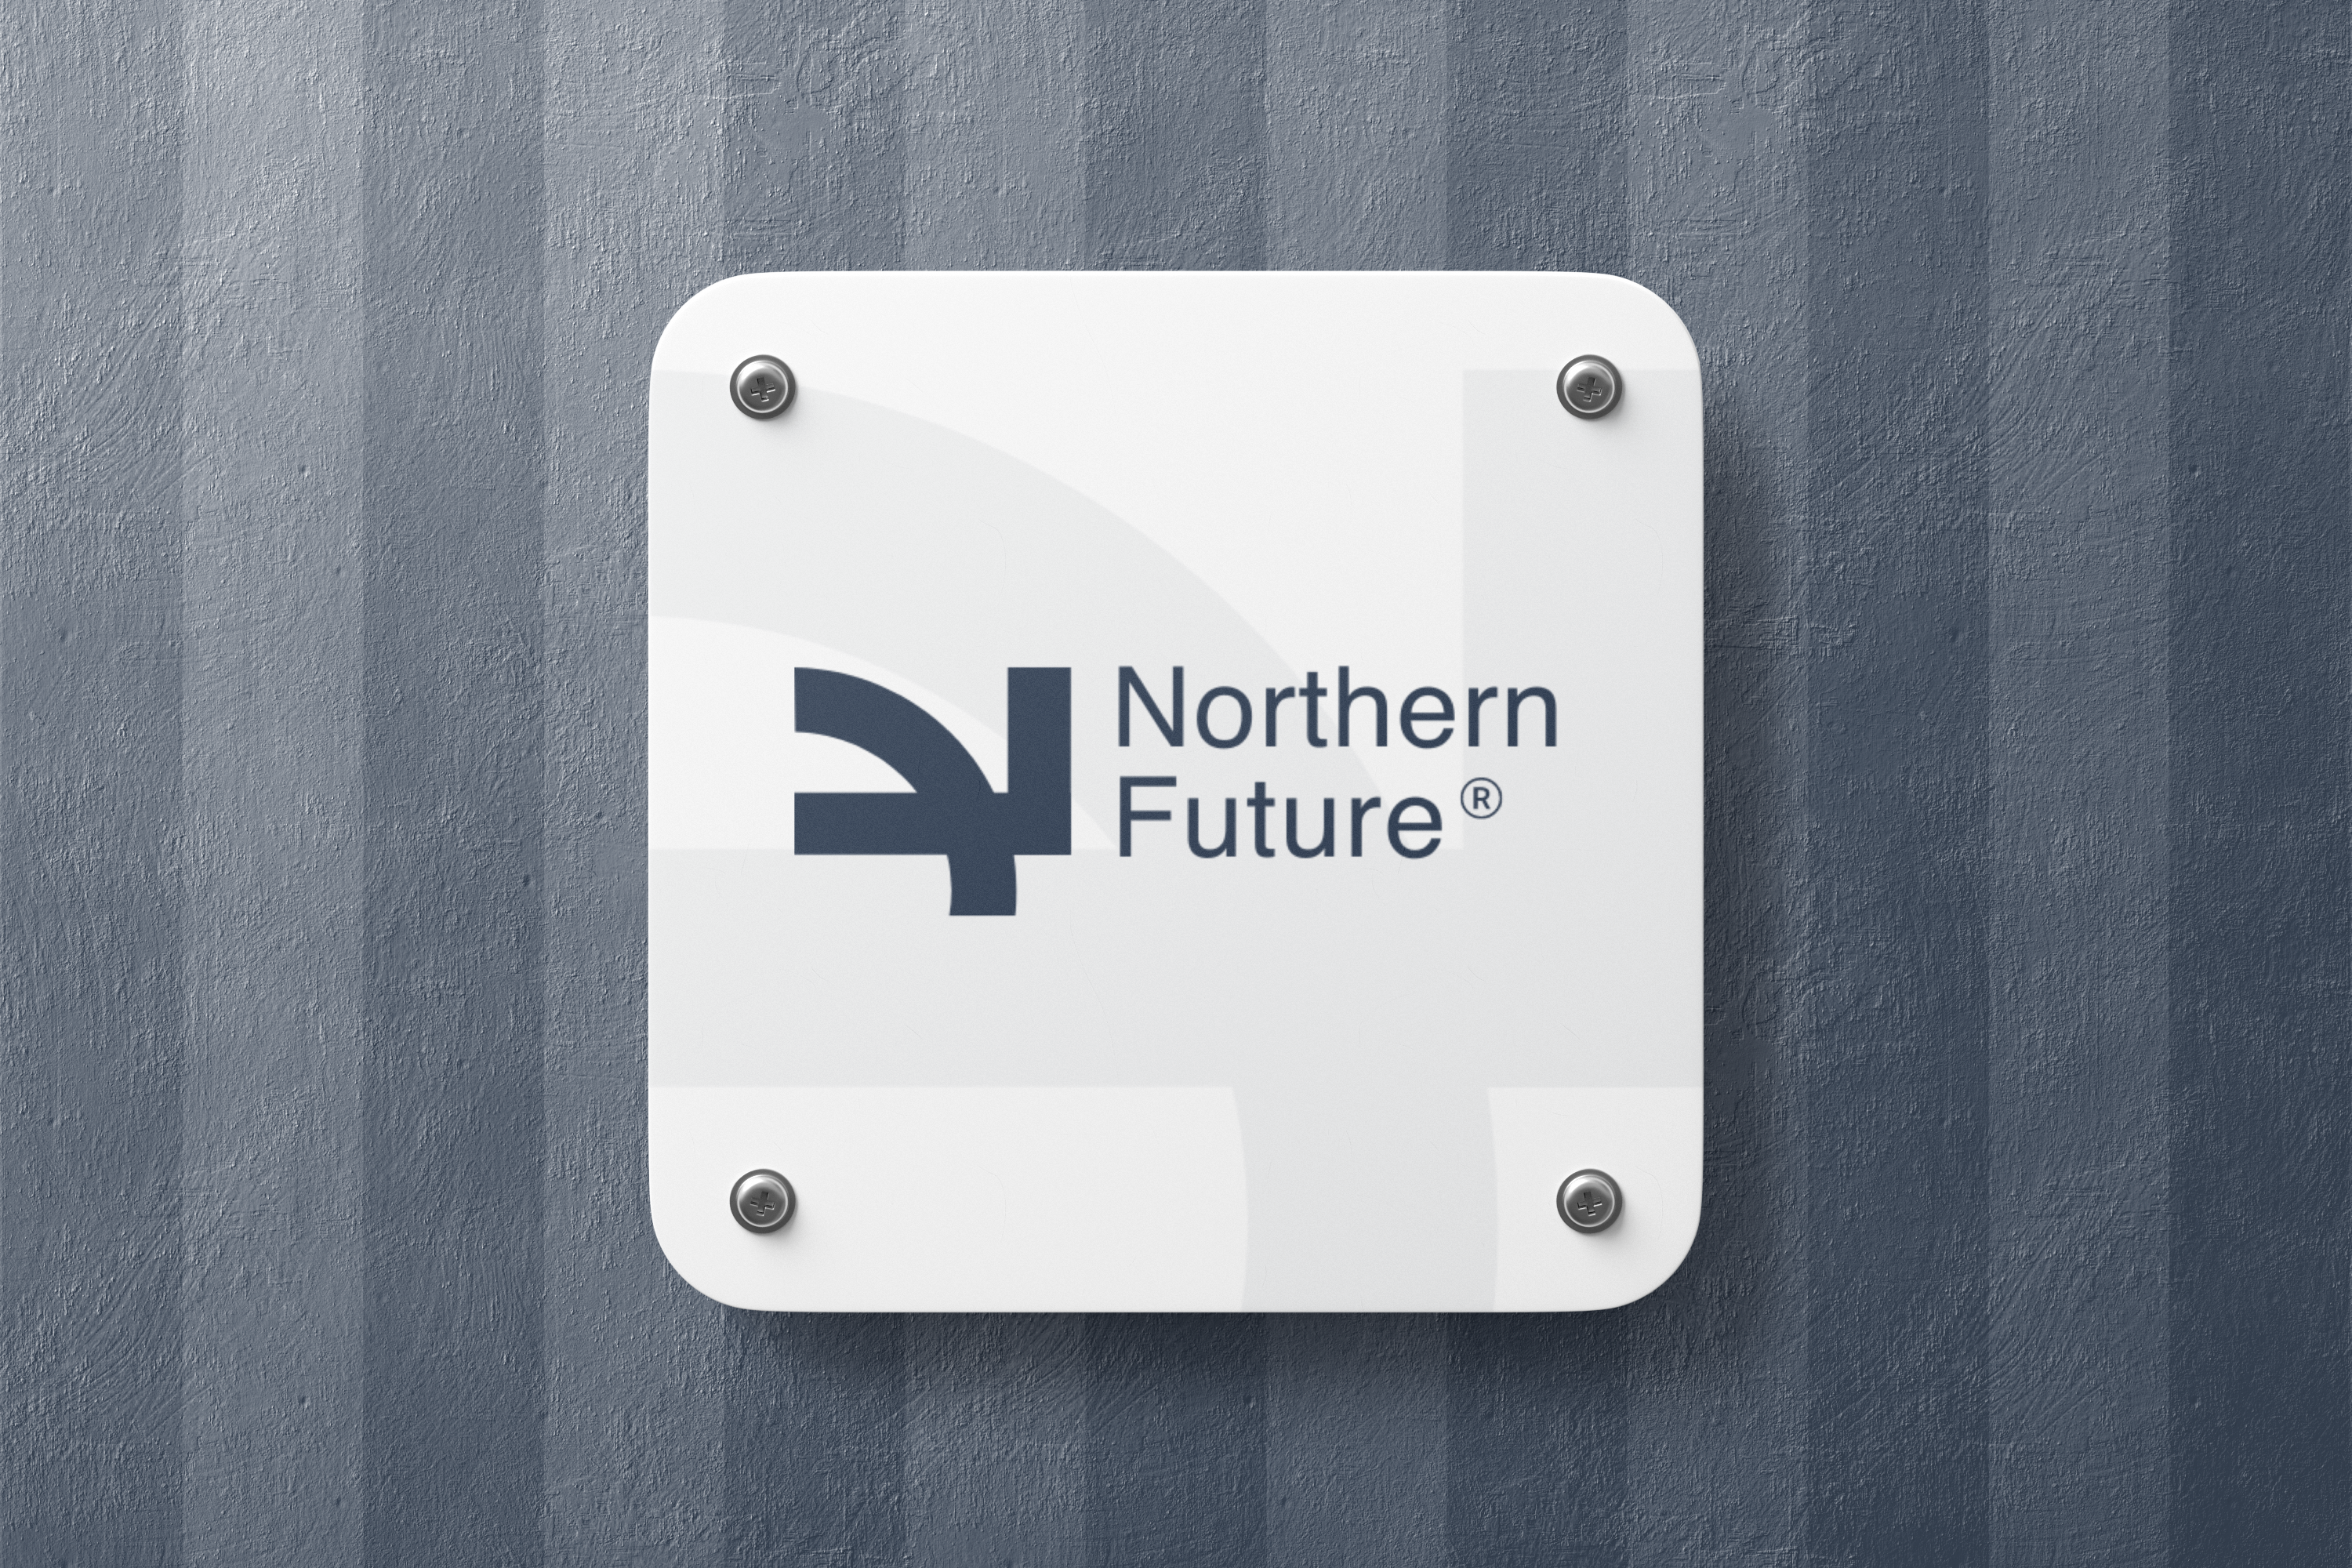 Northern Future